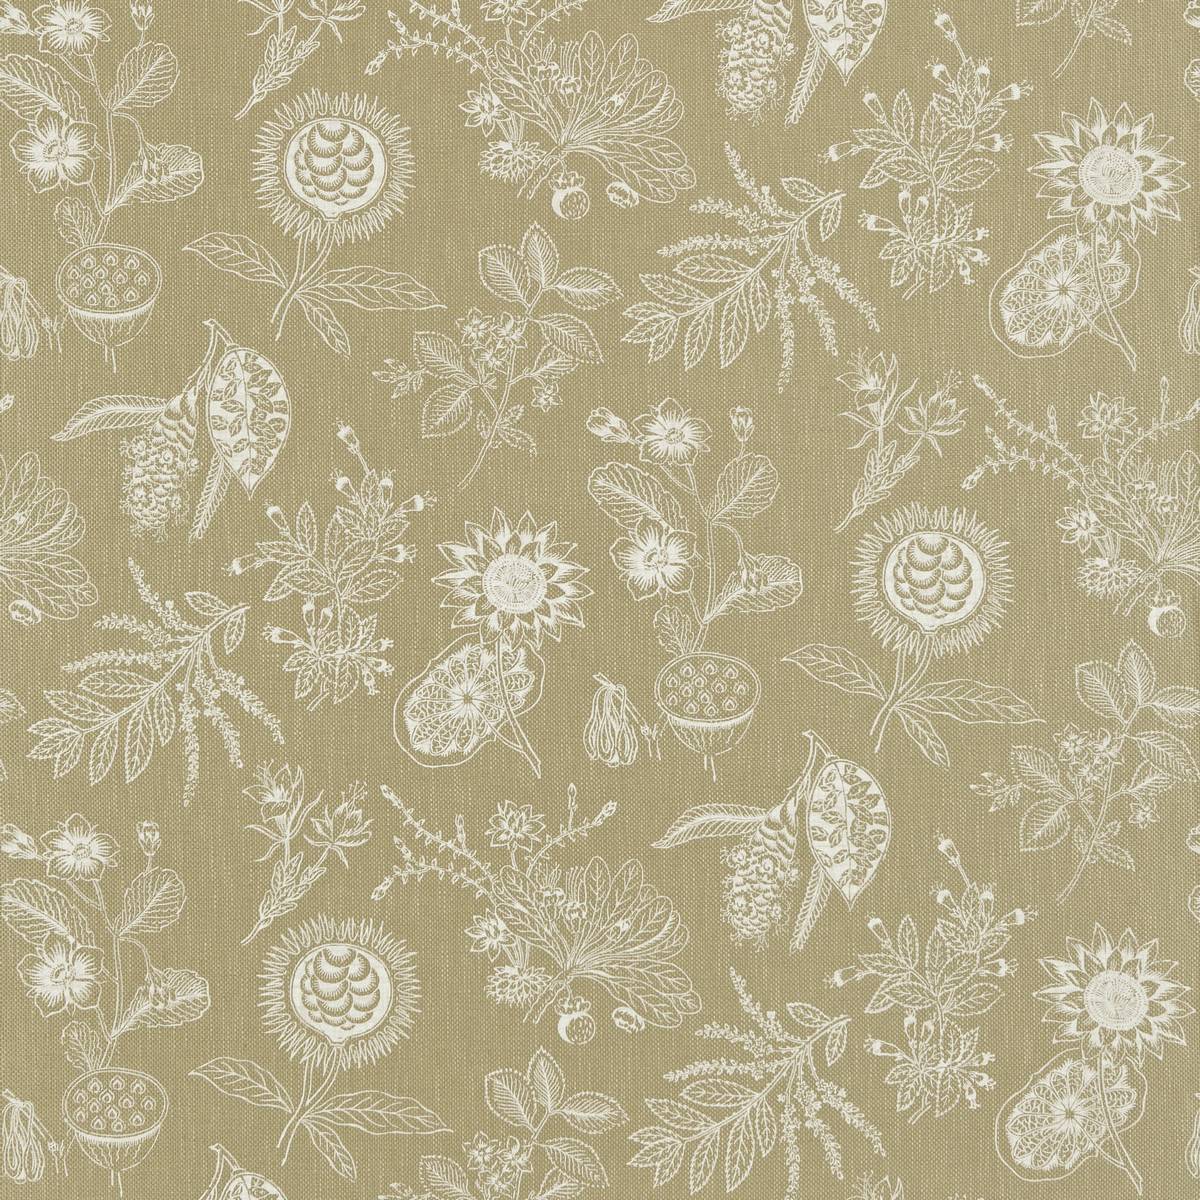 Botanique Linen/Ecru Fabric by Zoffany